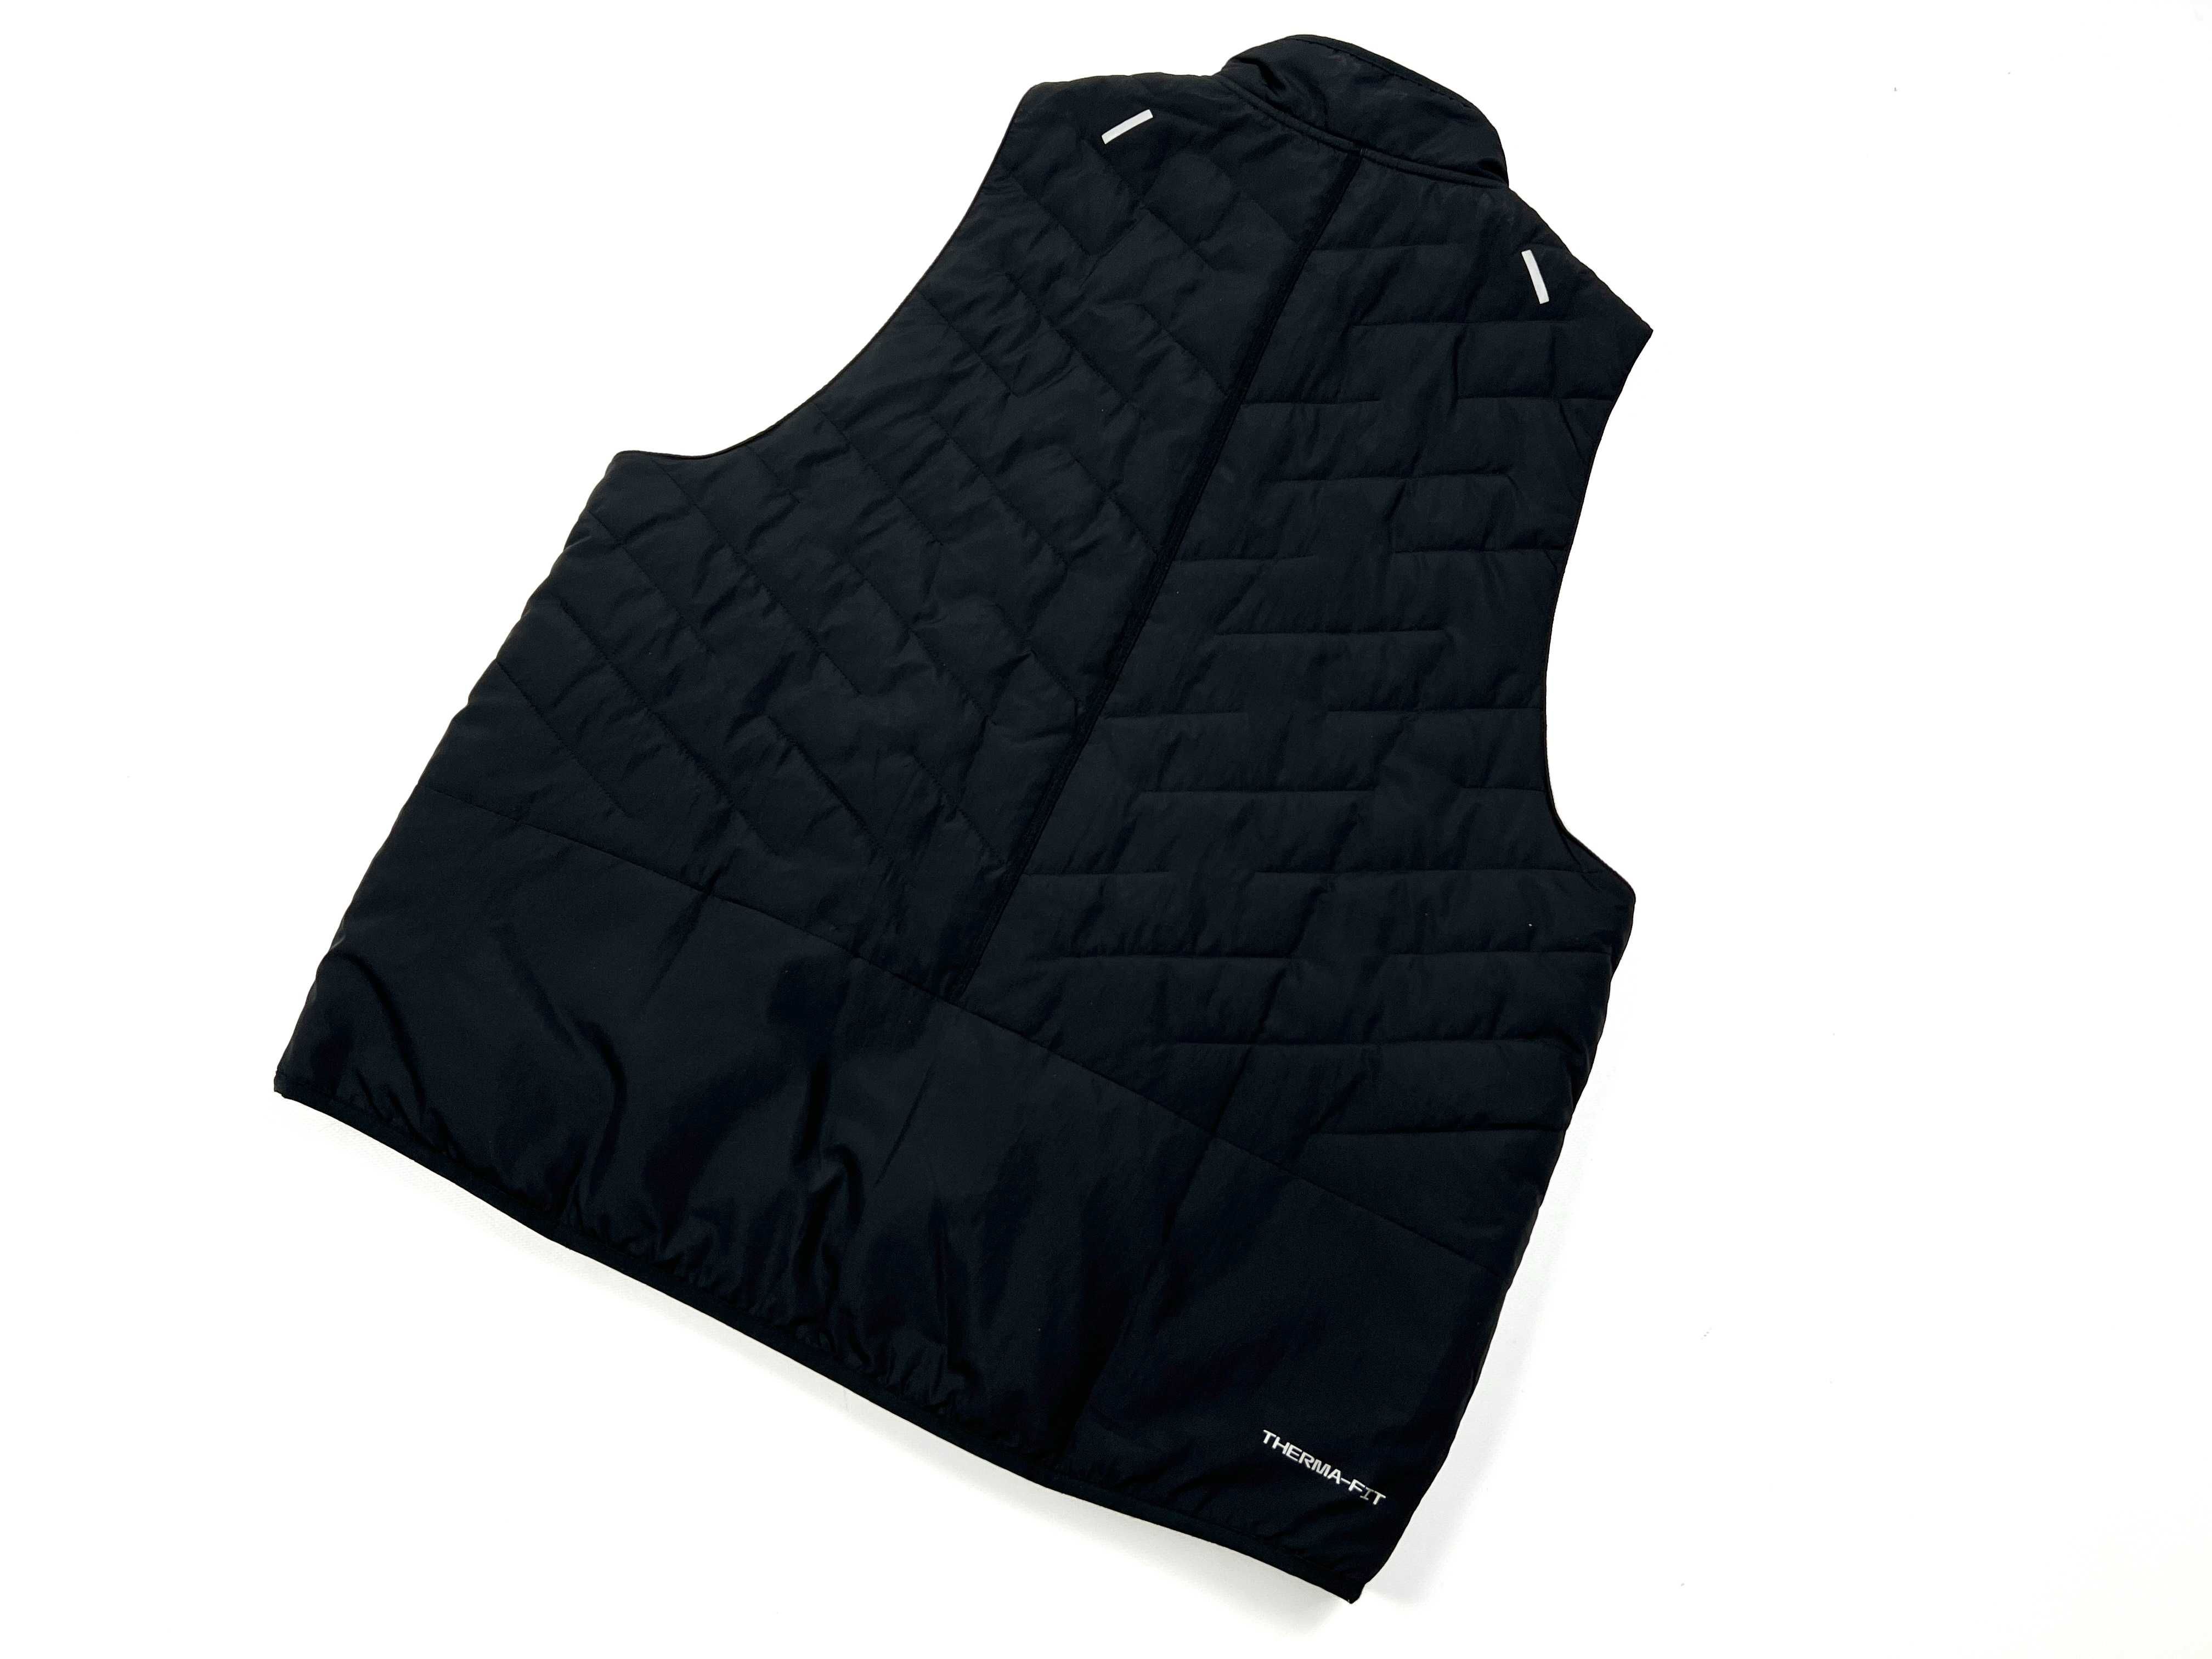 Спортивная жилетка Nike Therma Fit - XL - куртка кофта